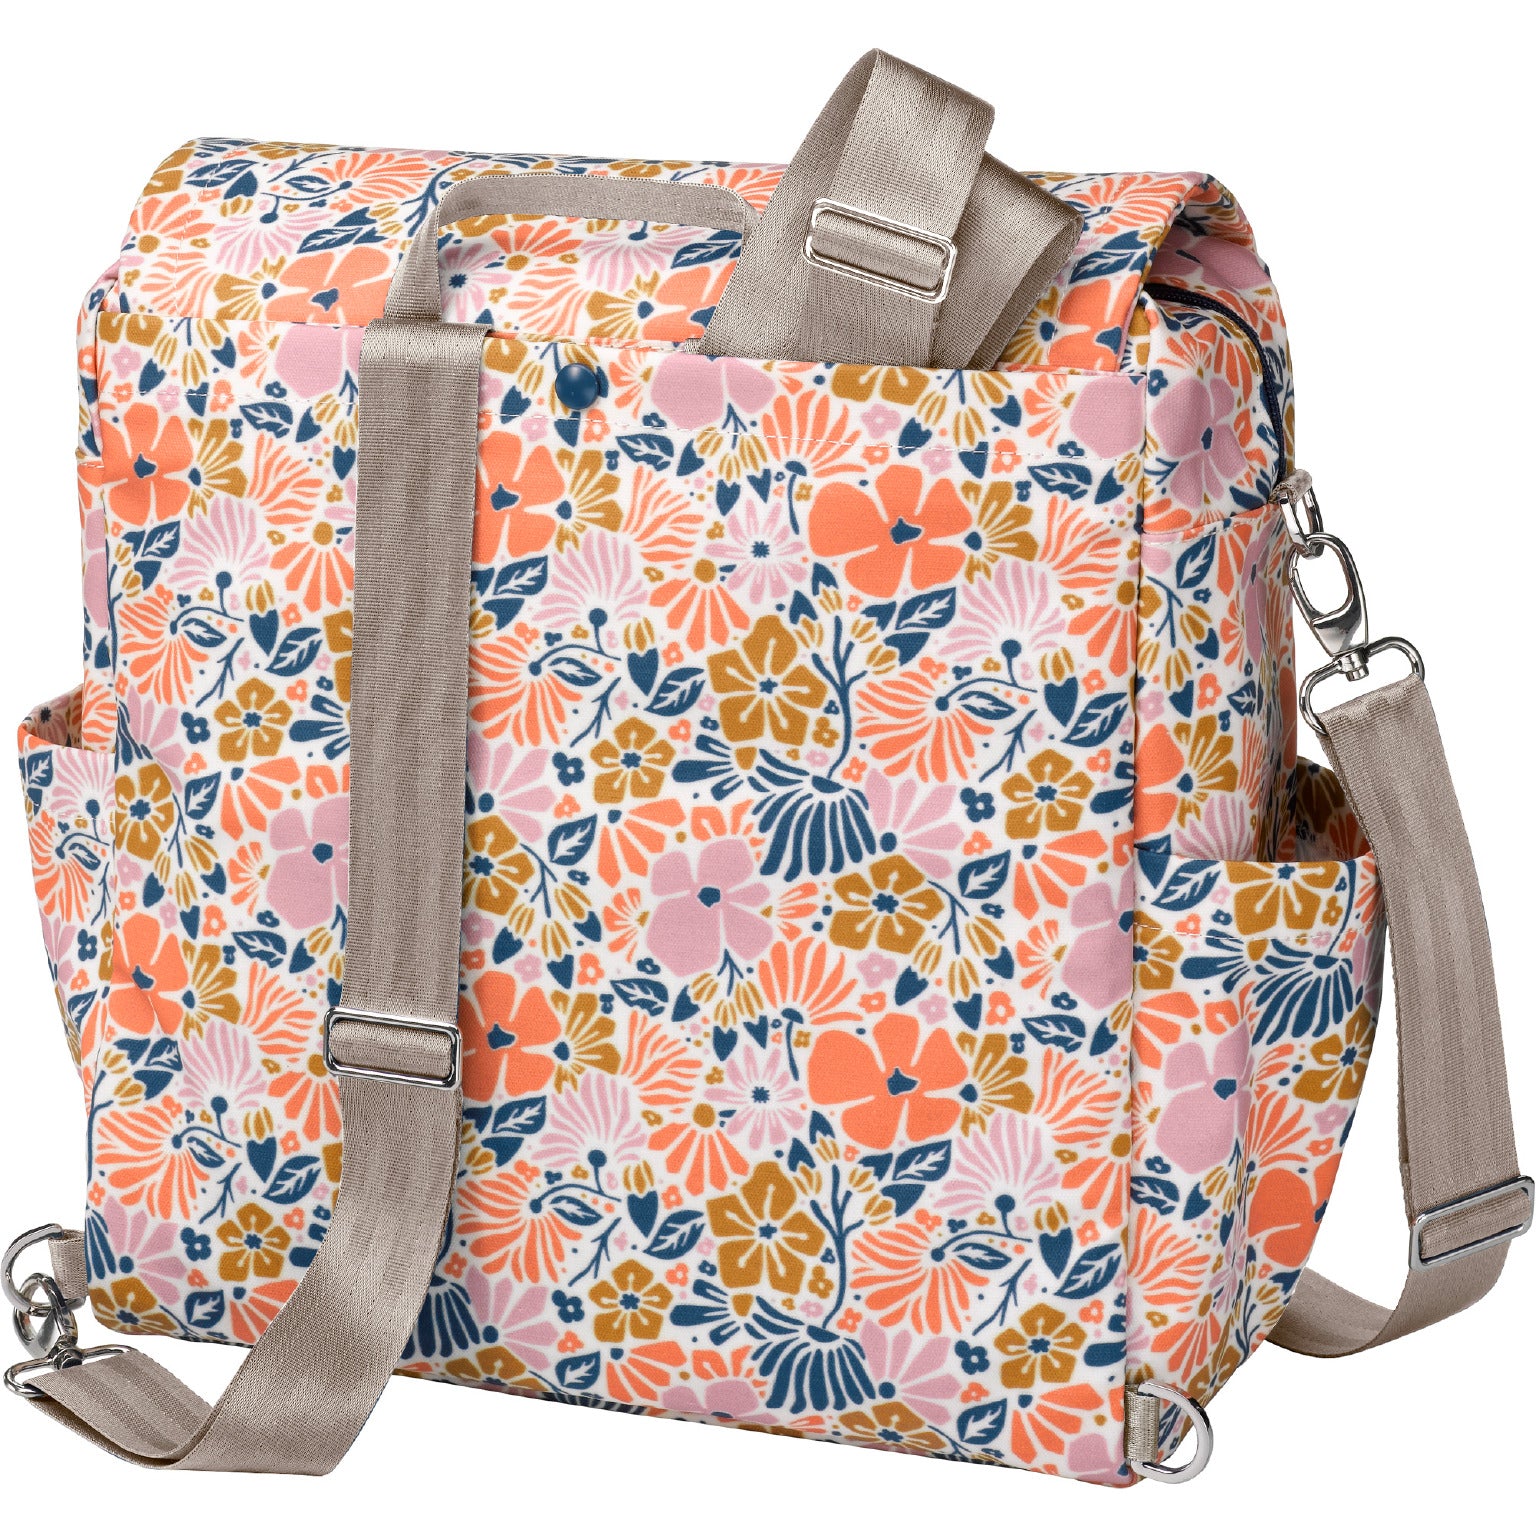 Petunia Pickle Bottom Boxy Backpack - Wildflowers Of Westbury